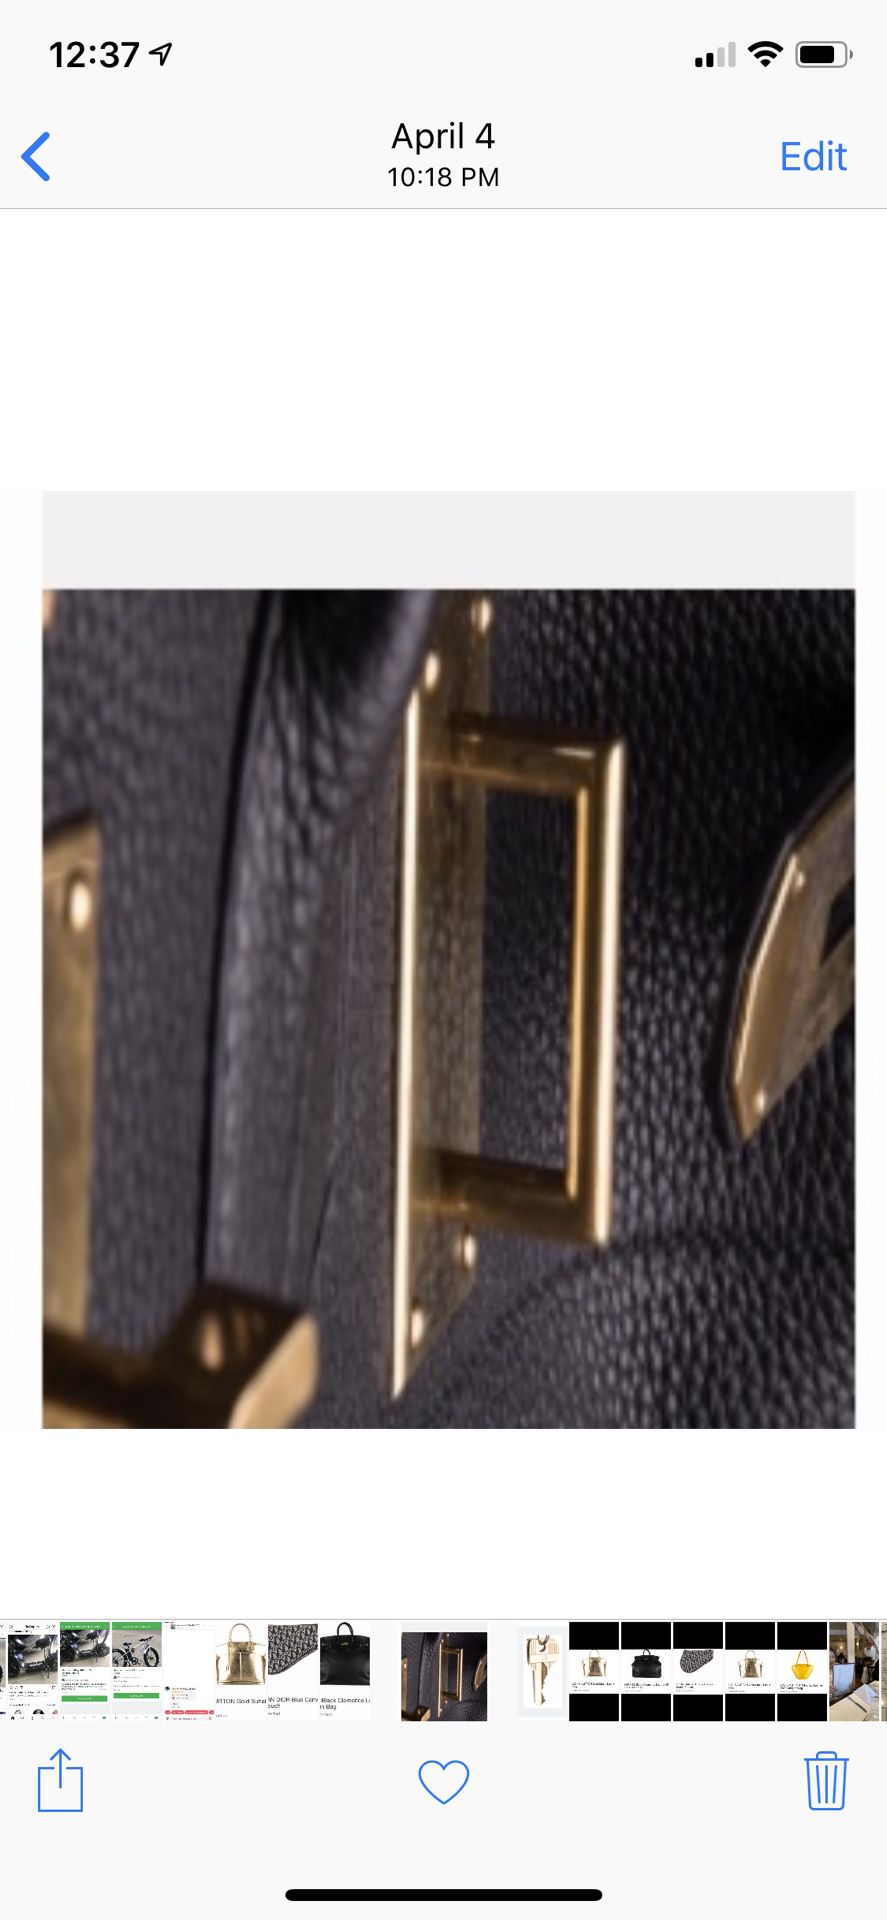 Hermès Birkin 50 Travel Bag in Brown Clemence leather – Fancy Lux